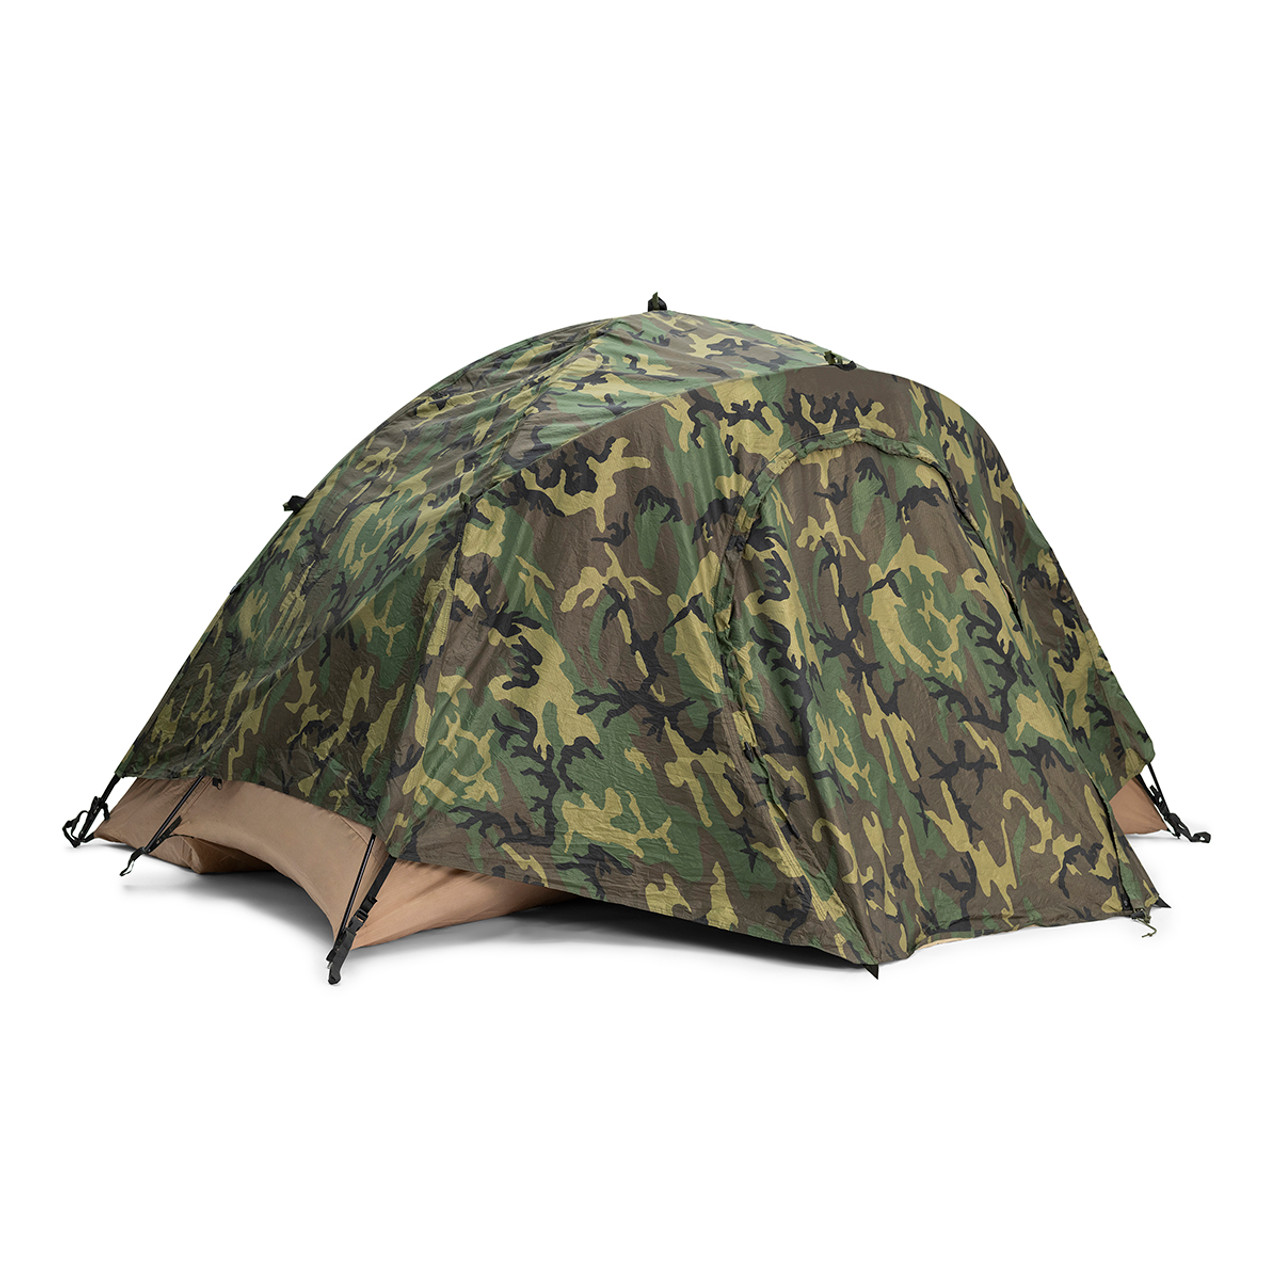 USMC Issue 2 Person Combat Tent, Used